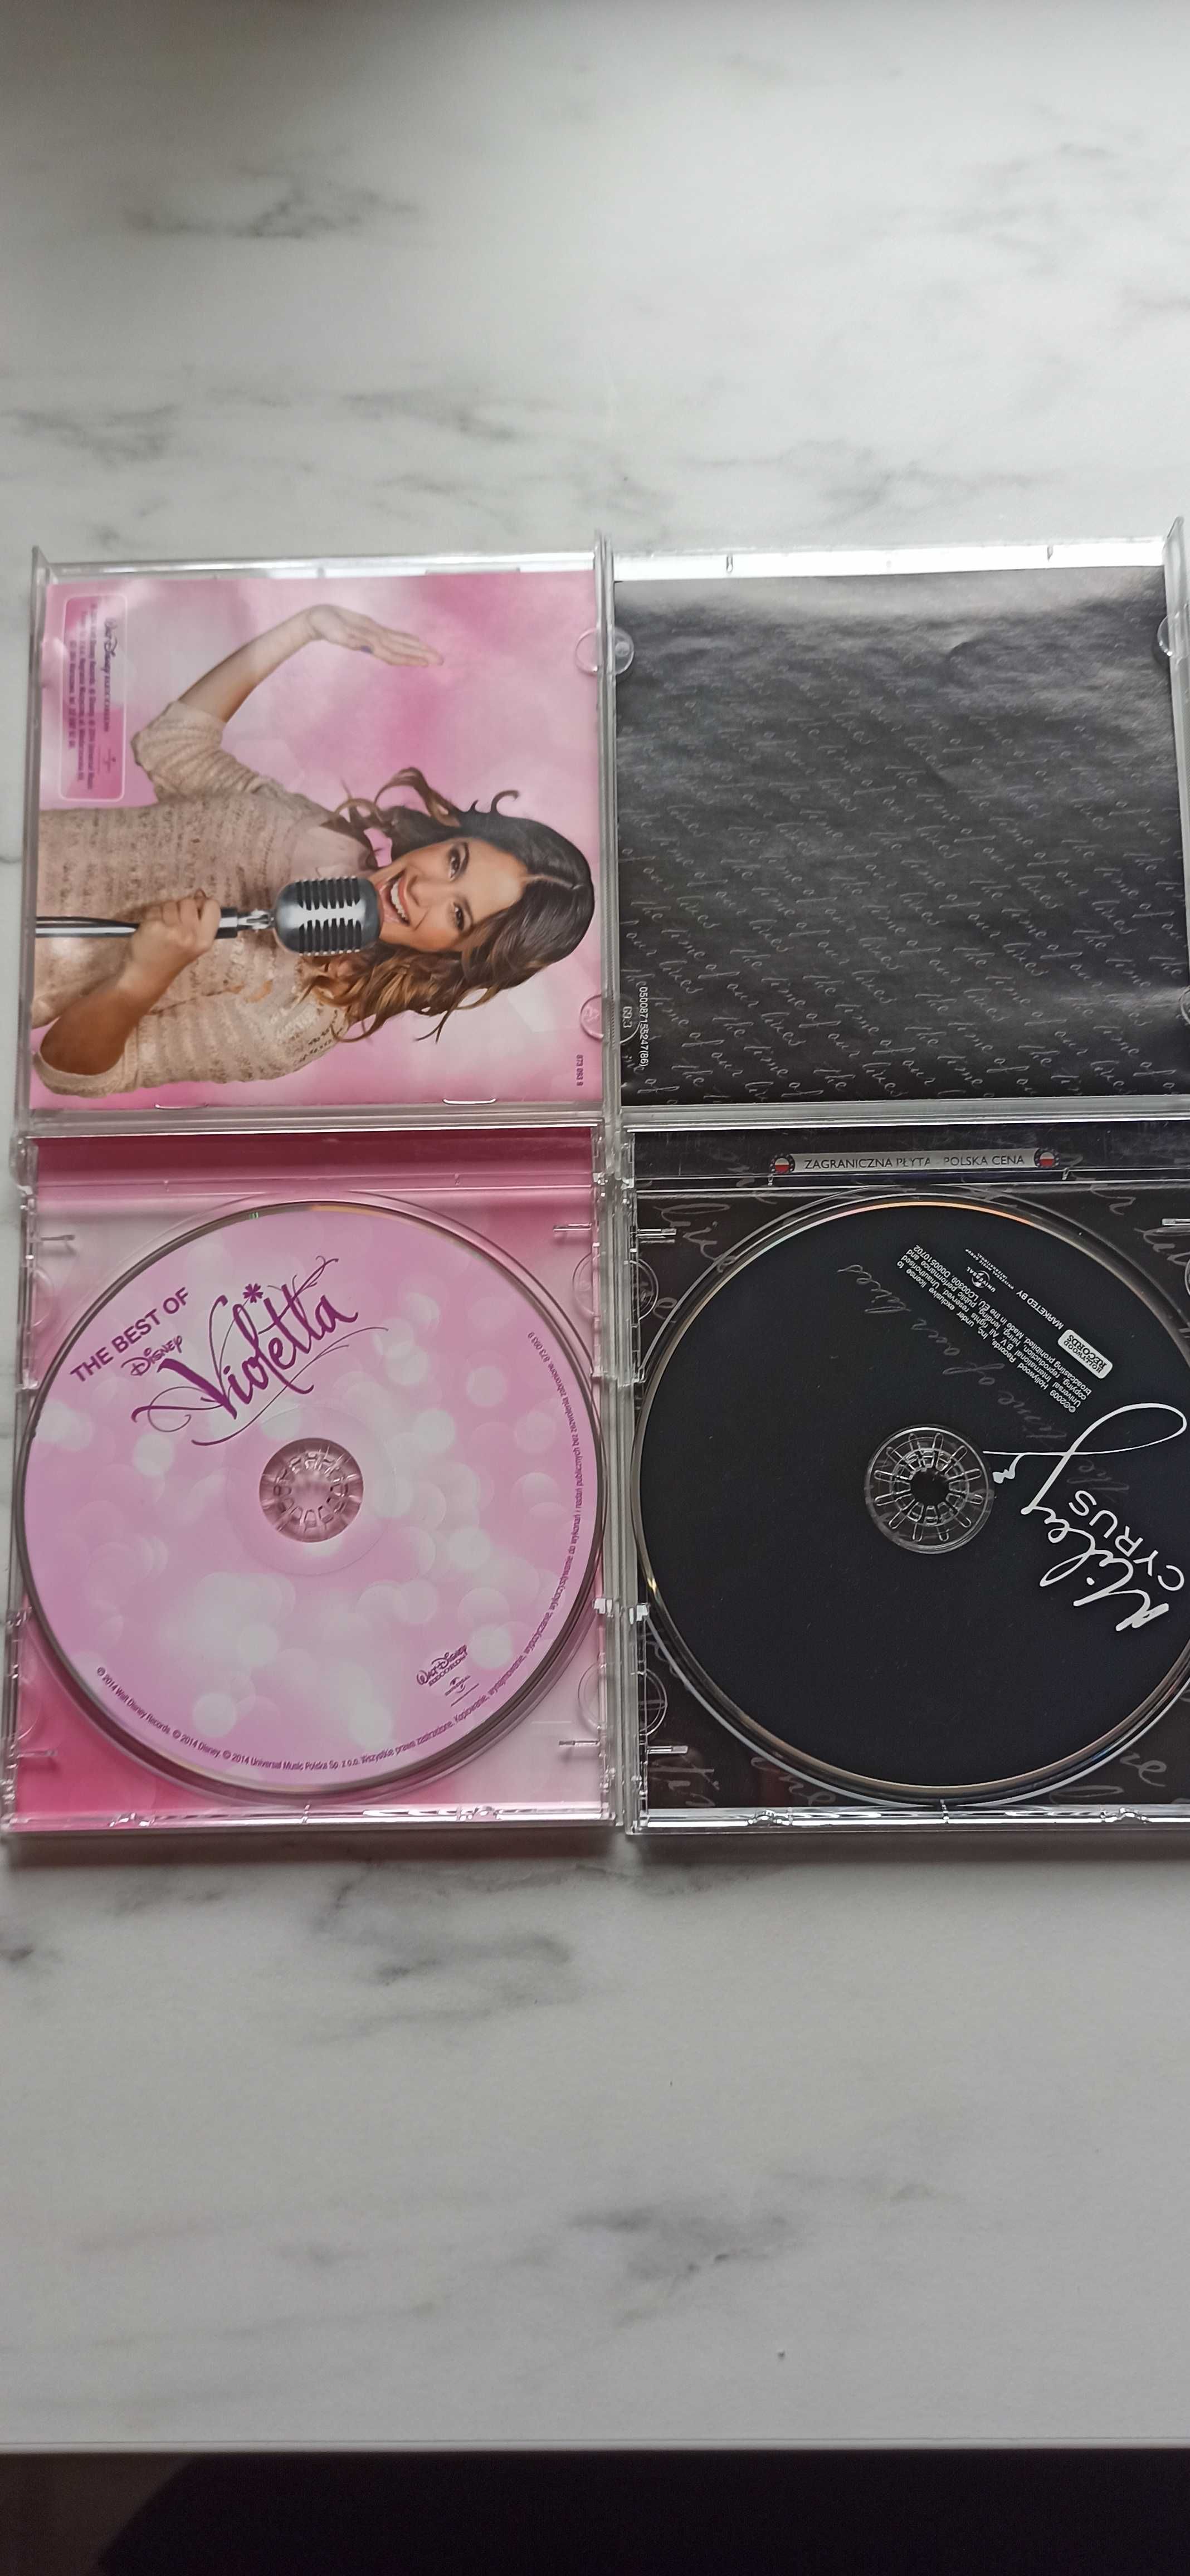 The Best Of Violetta oraz Miley Cyrus - CD Polecam!